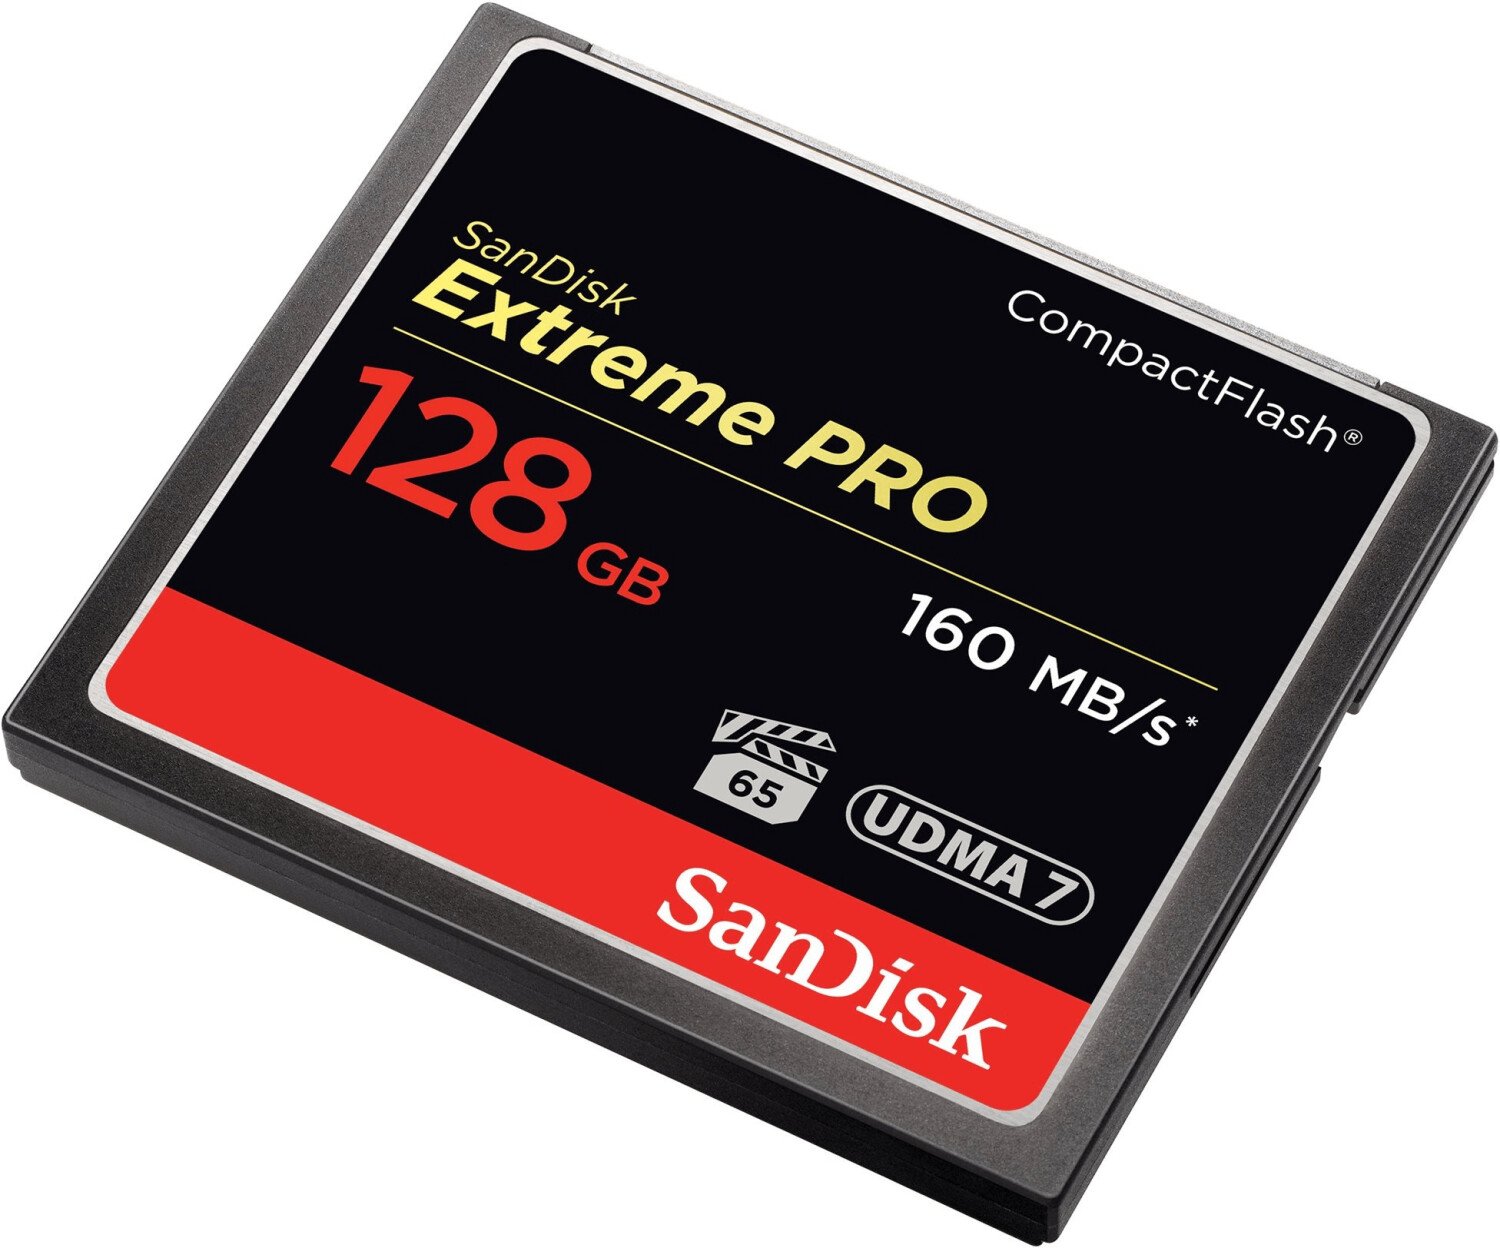 Sandisk Extreme Pro 128GB UDMA 7 Compact Flash Memory Card